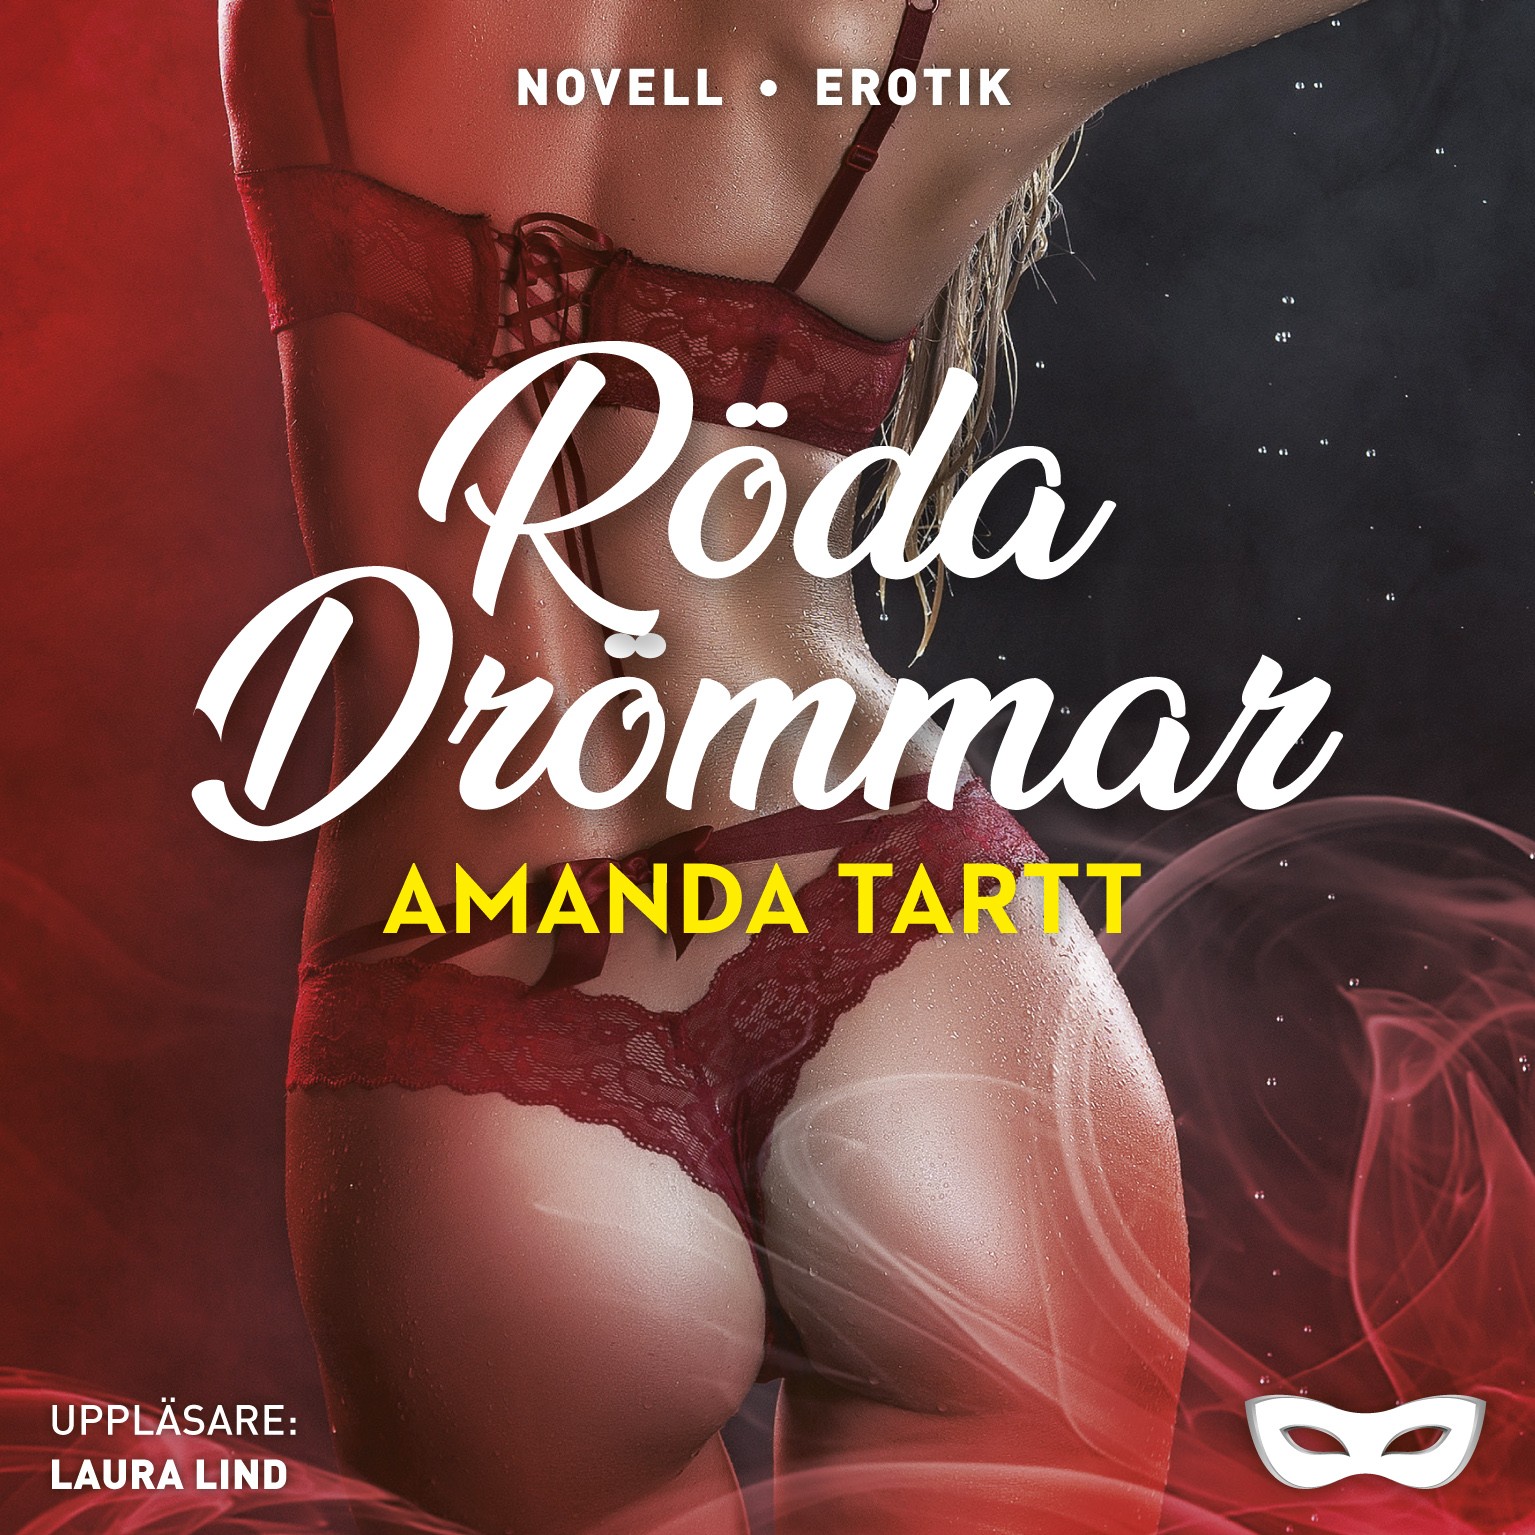 DROMMAR3_Roda drommar_Amanda Tartt_audio.jpg